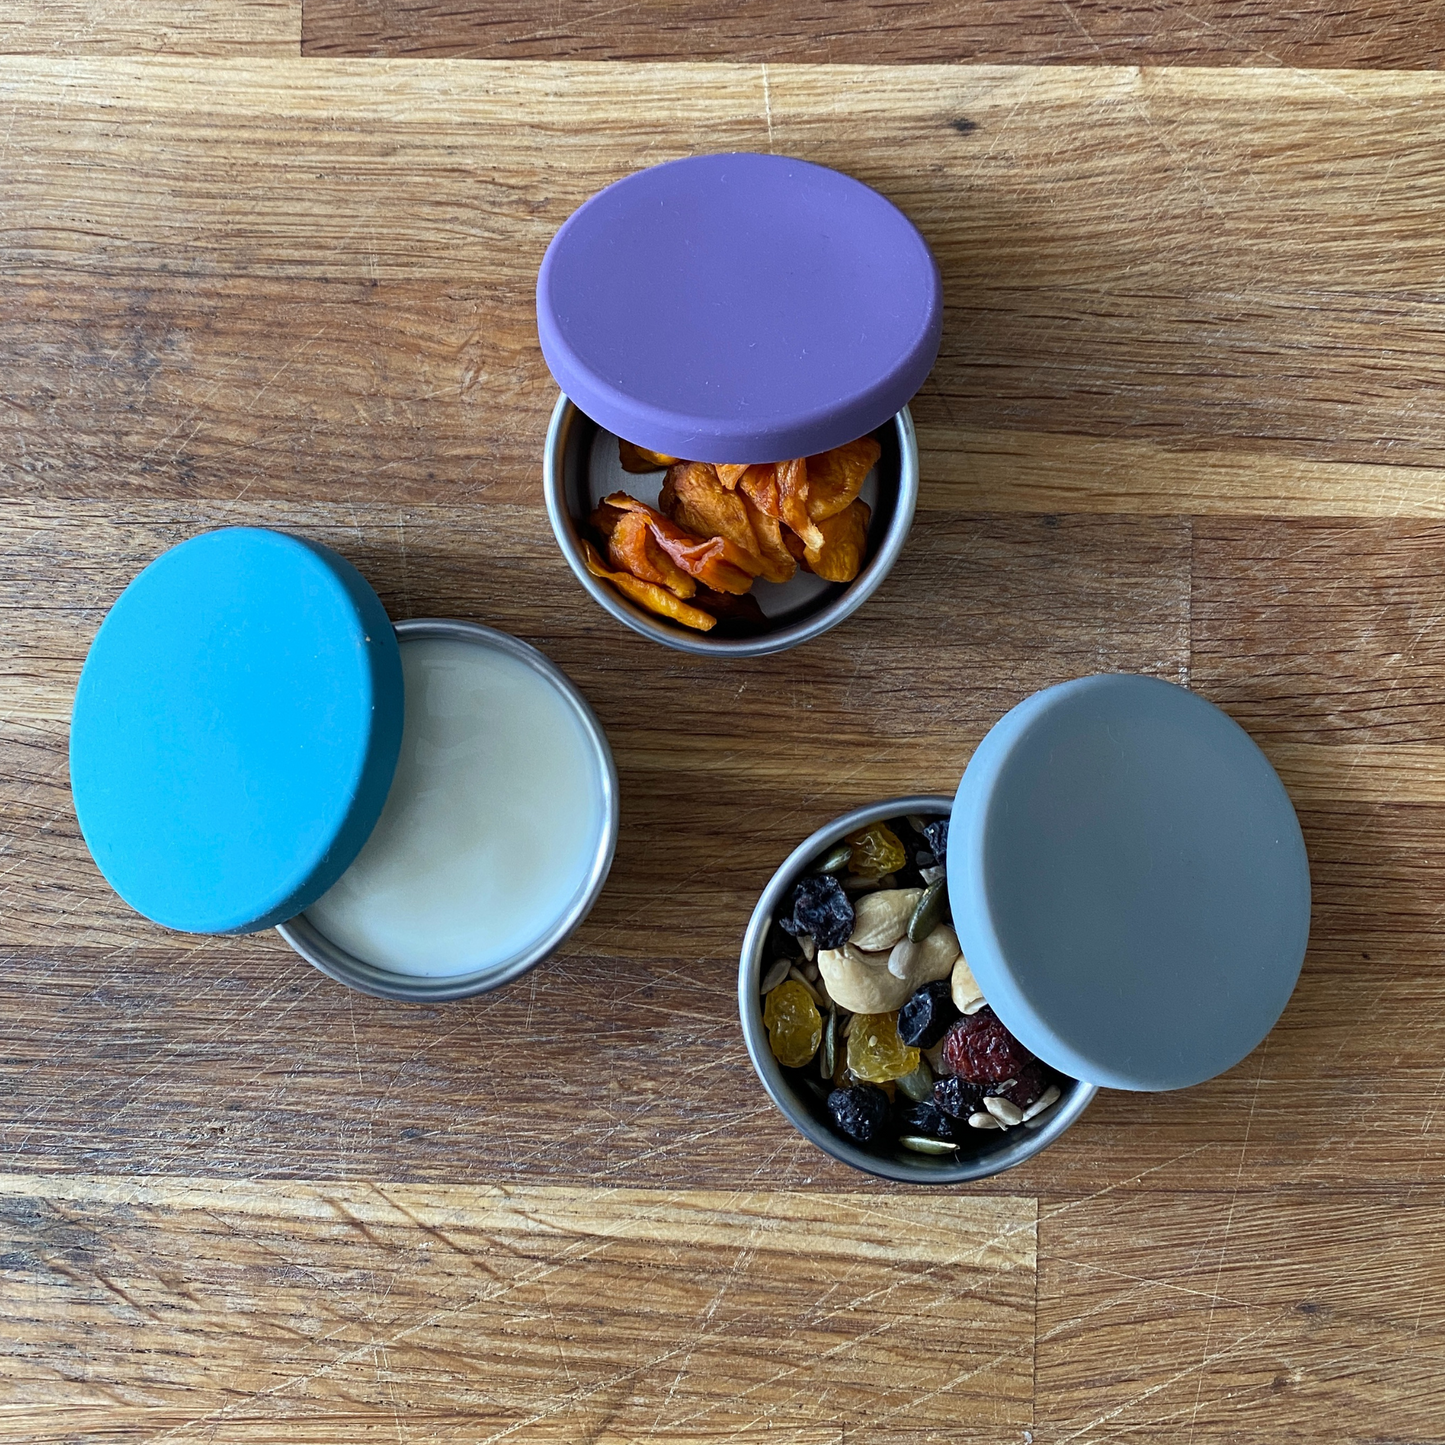 Moonmoon Sauce Pots, stainless steel pots set with lids containers, wholesale, stainless steel bento box uk, Minitie, Black & Blum, Elephant Box, dressing pots